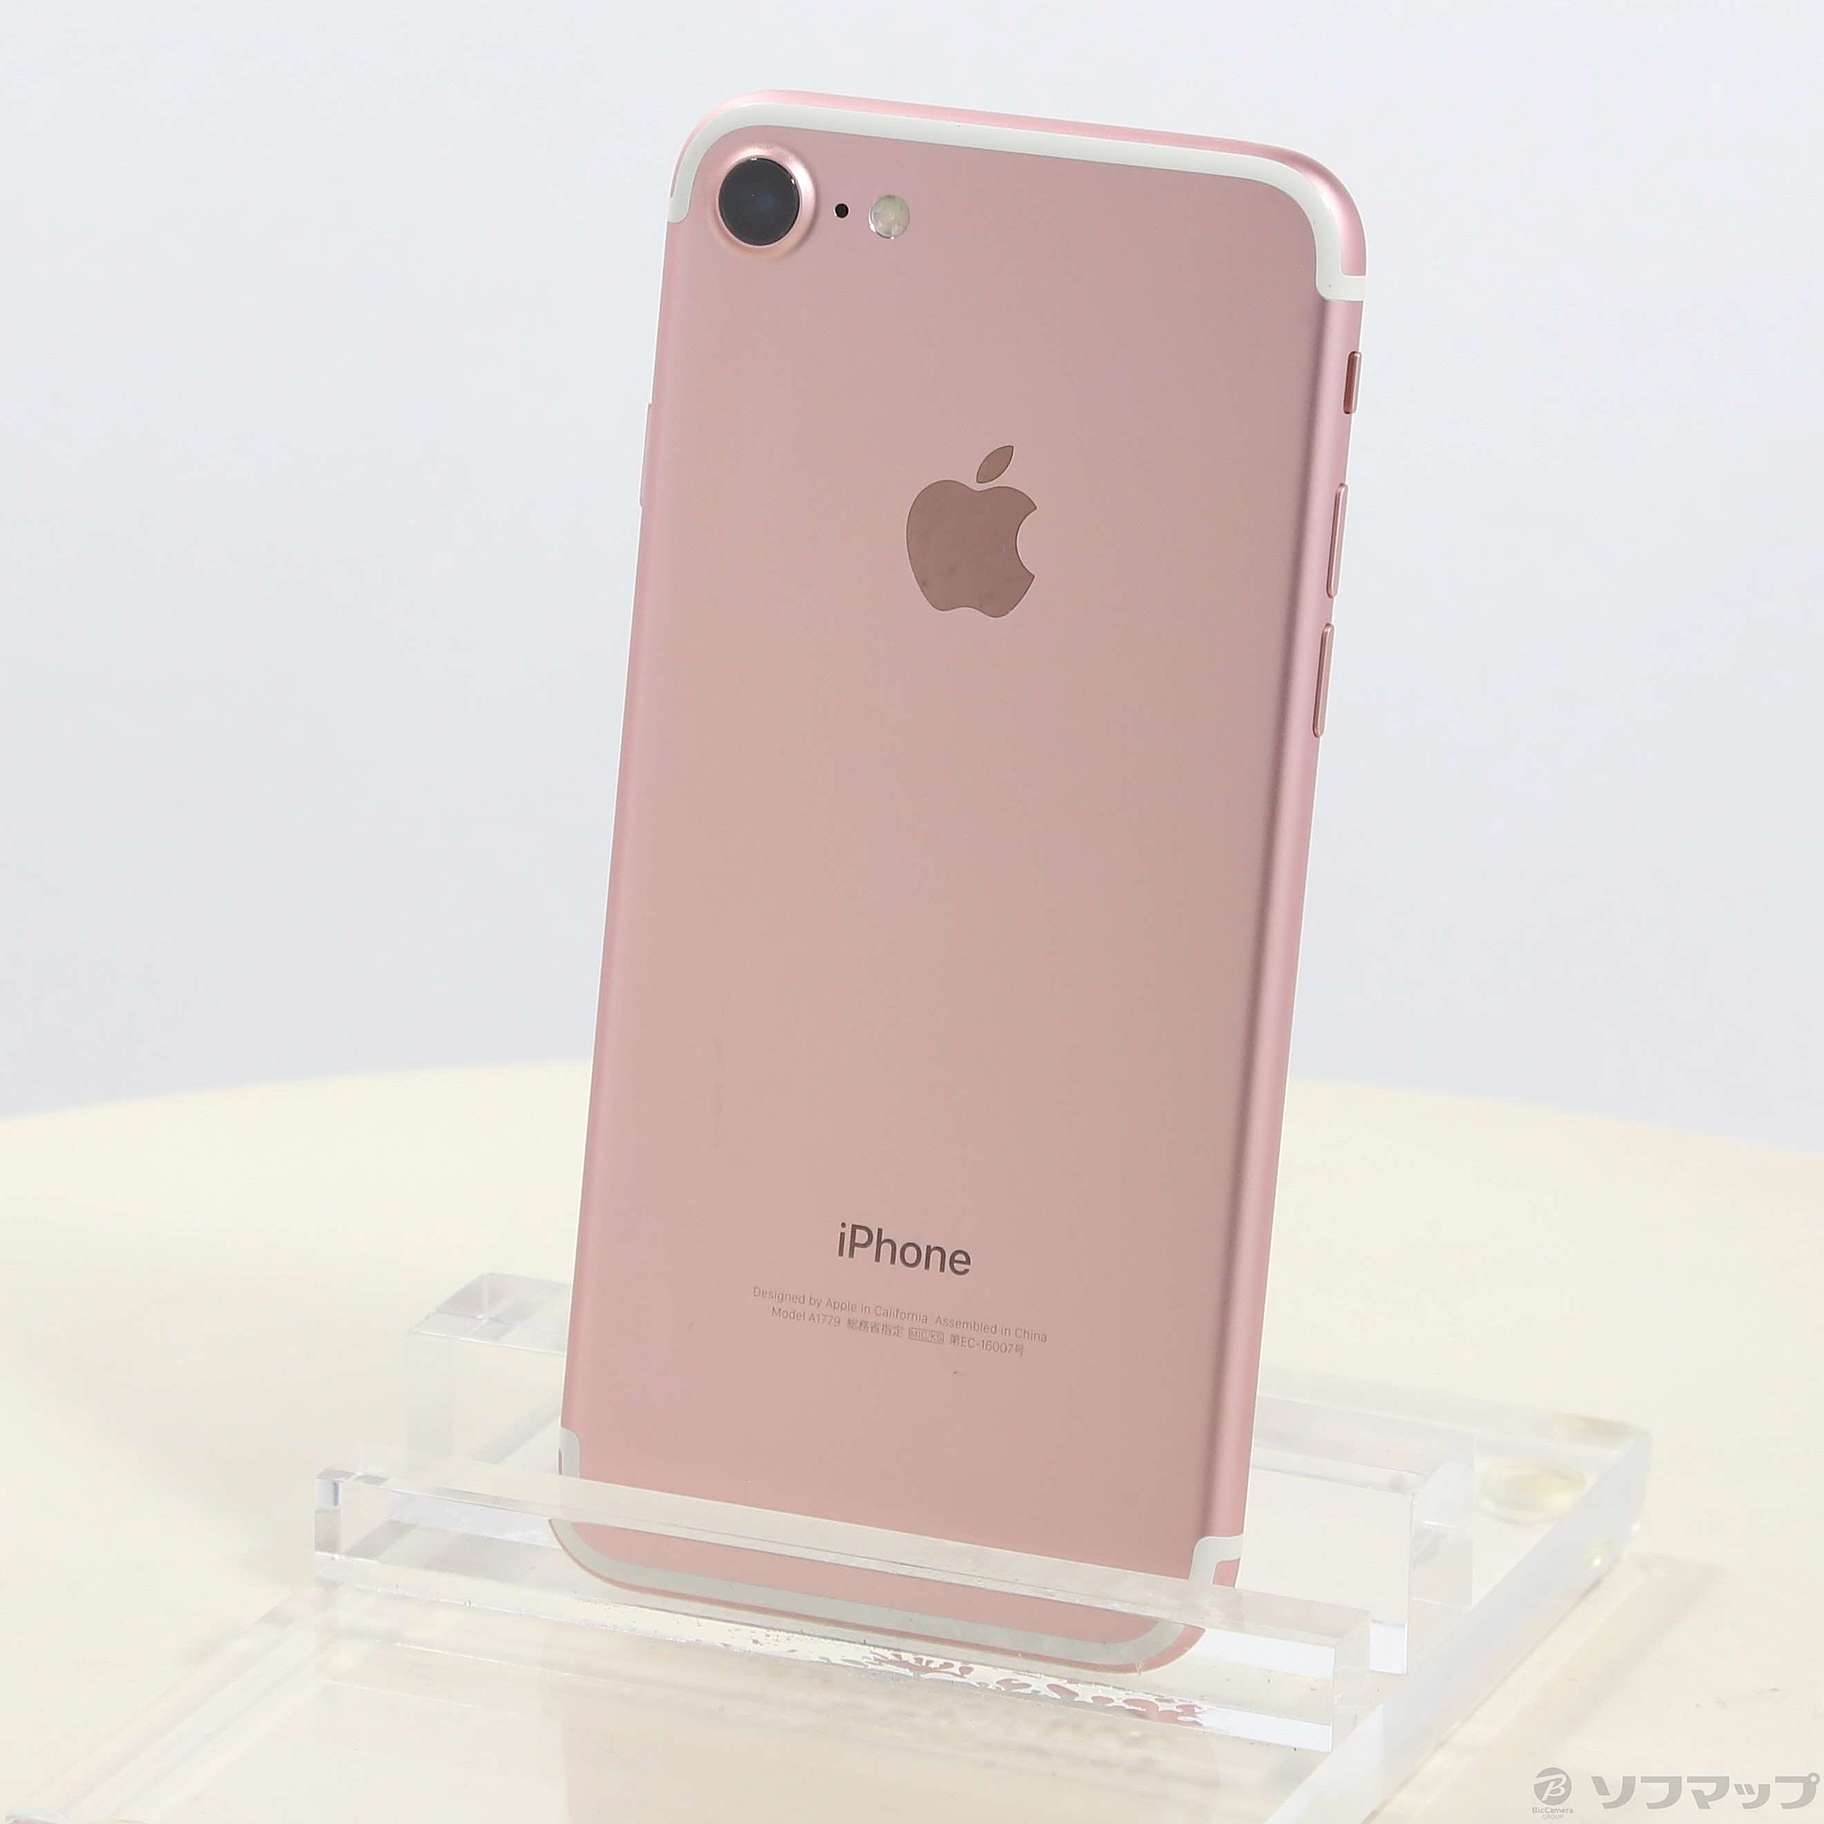 Apple iPhone7 128GB SIMフリー gold - スマートフォン本体